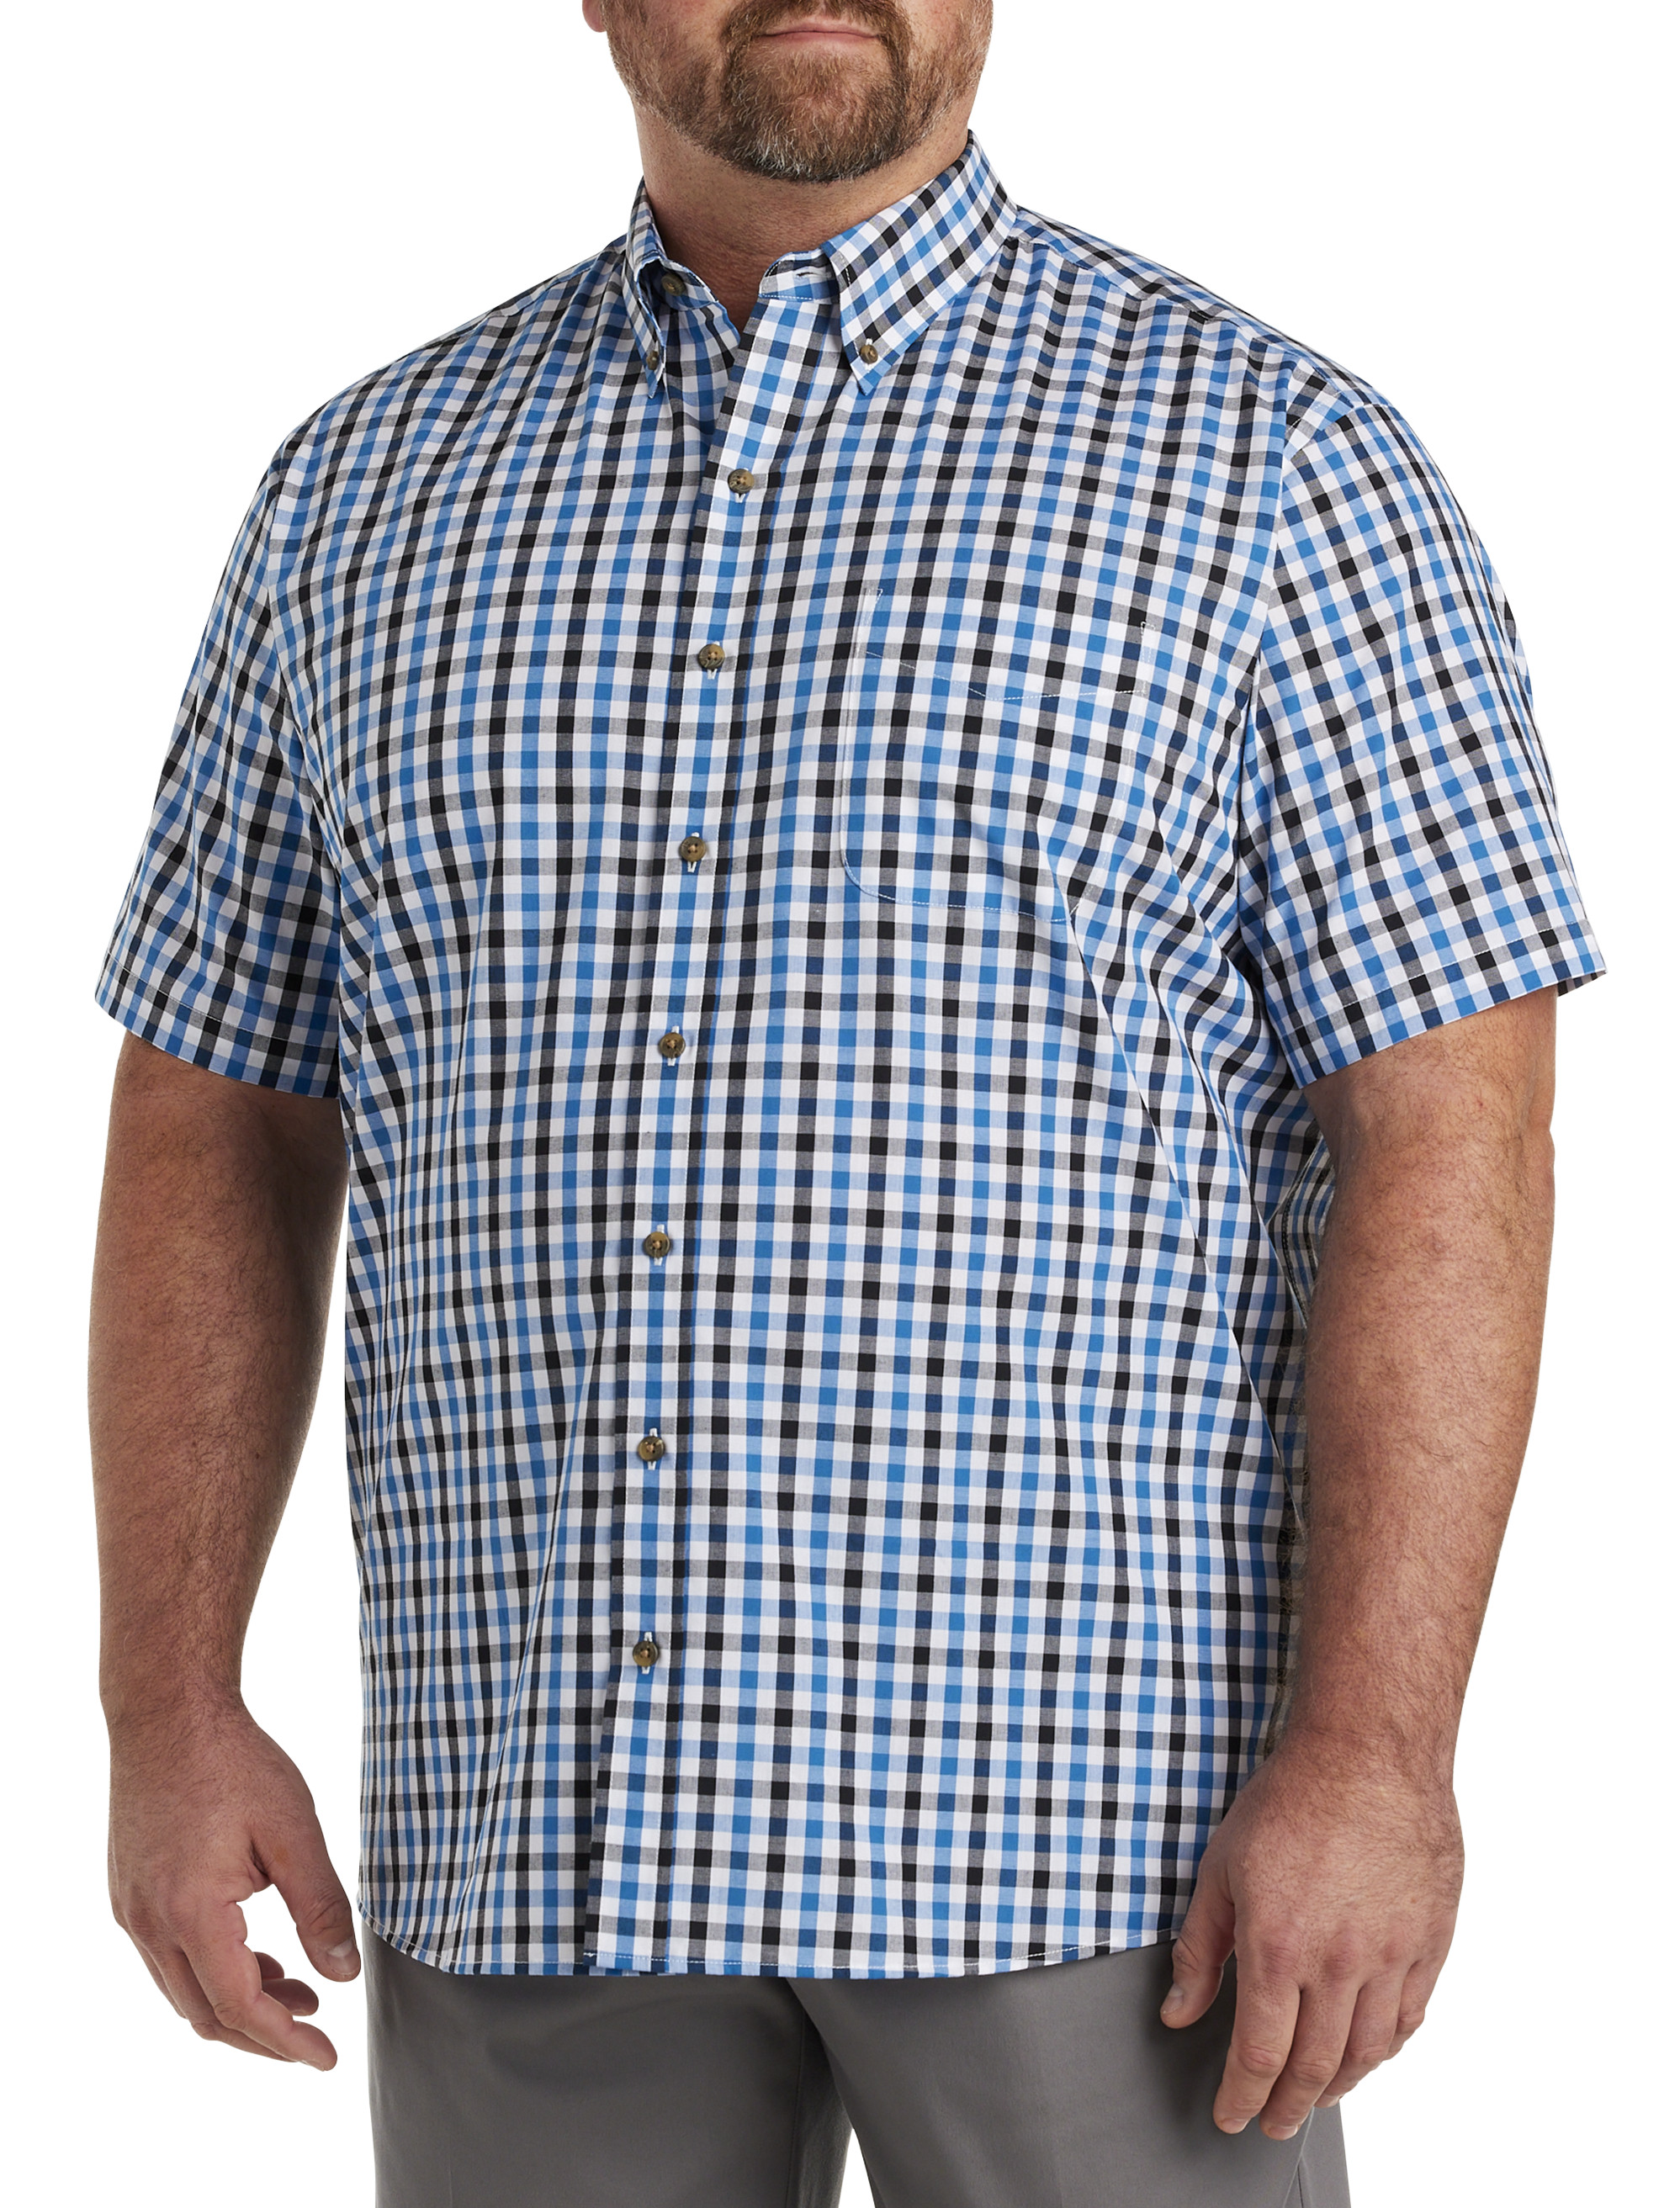 Men's Shirts Big and Tall, Men's Fishing Shirts Long Sleeve Travel Work  Shirts Button Down Shirts with Pockets, Black, Medium : :  Clothing, Shoes & Accessories